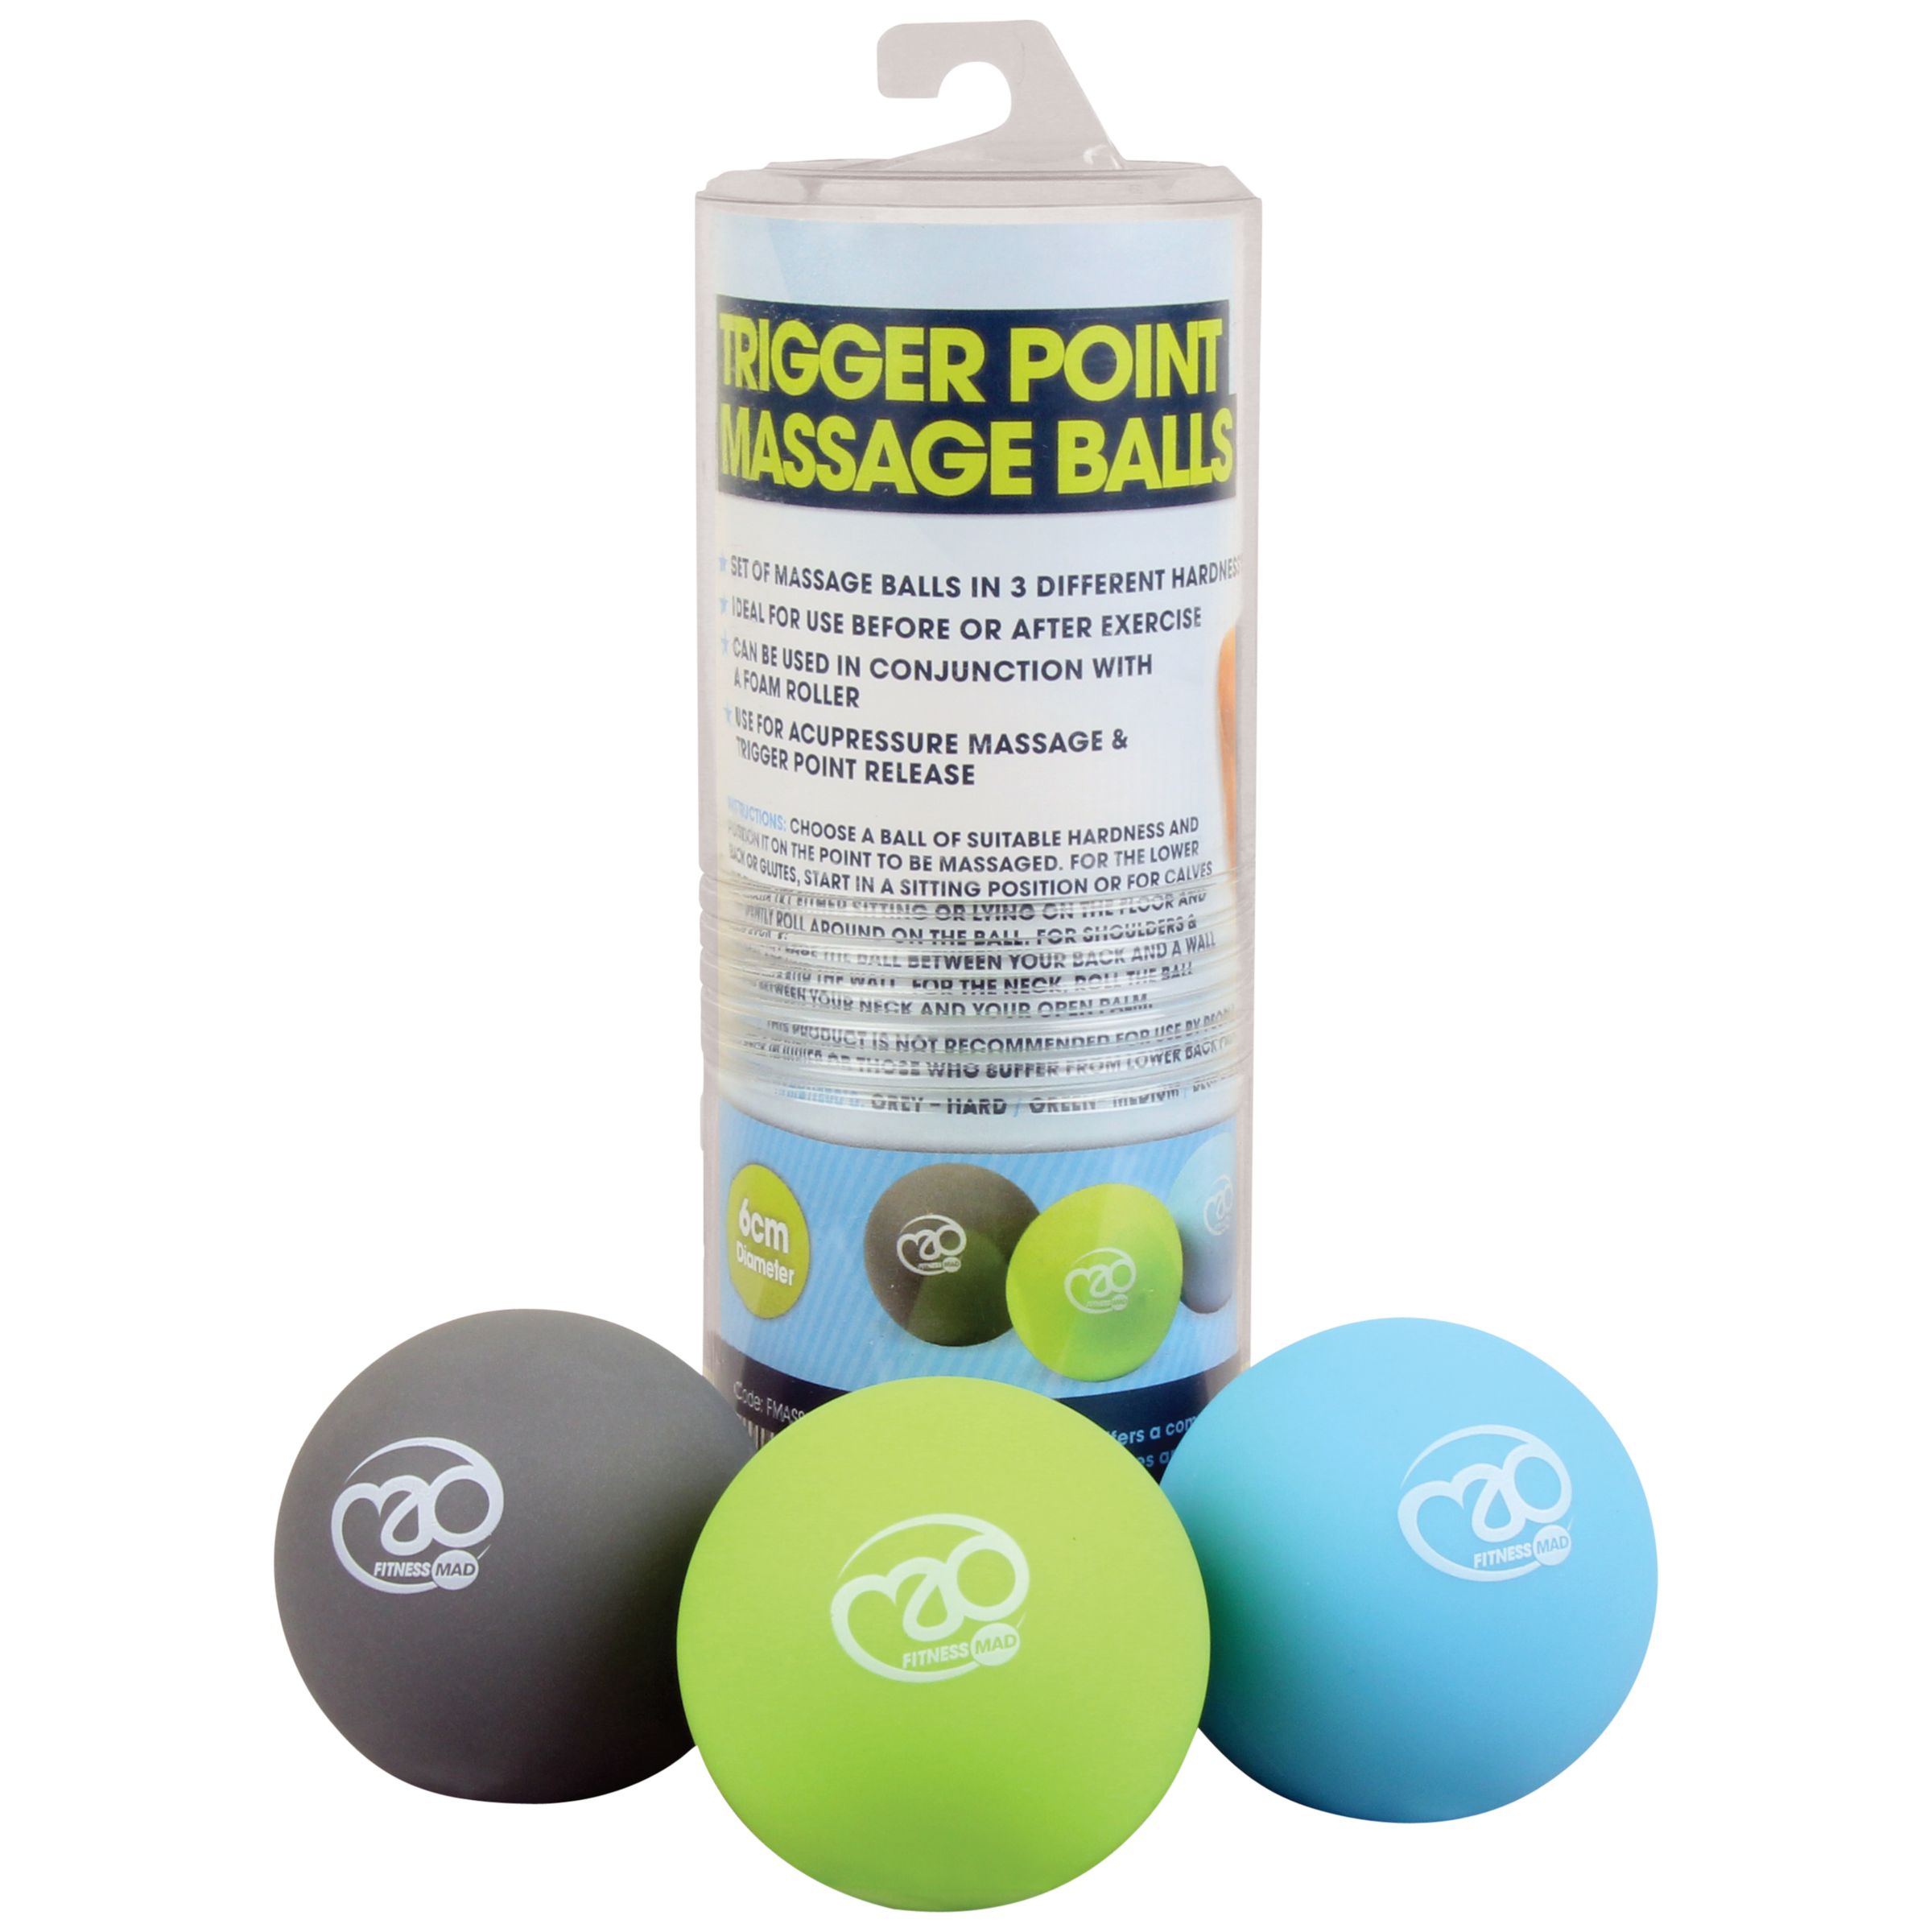 Yoga-Mad Yoga-Mad Trigger Point Massage Ball Set, Multi